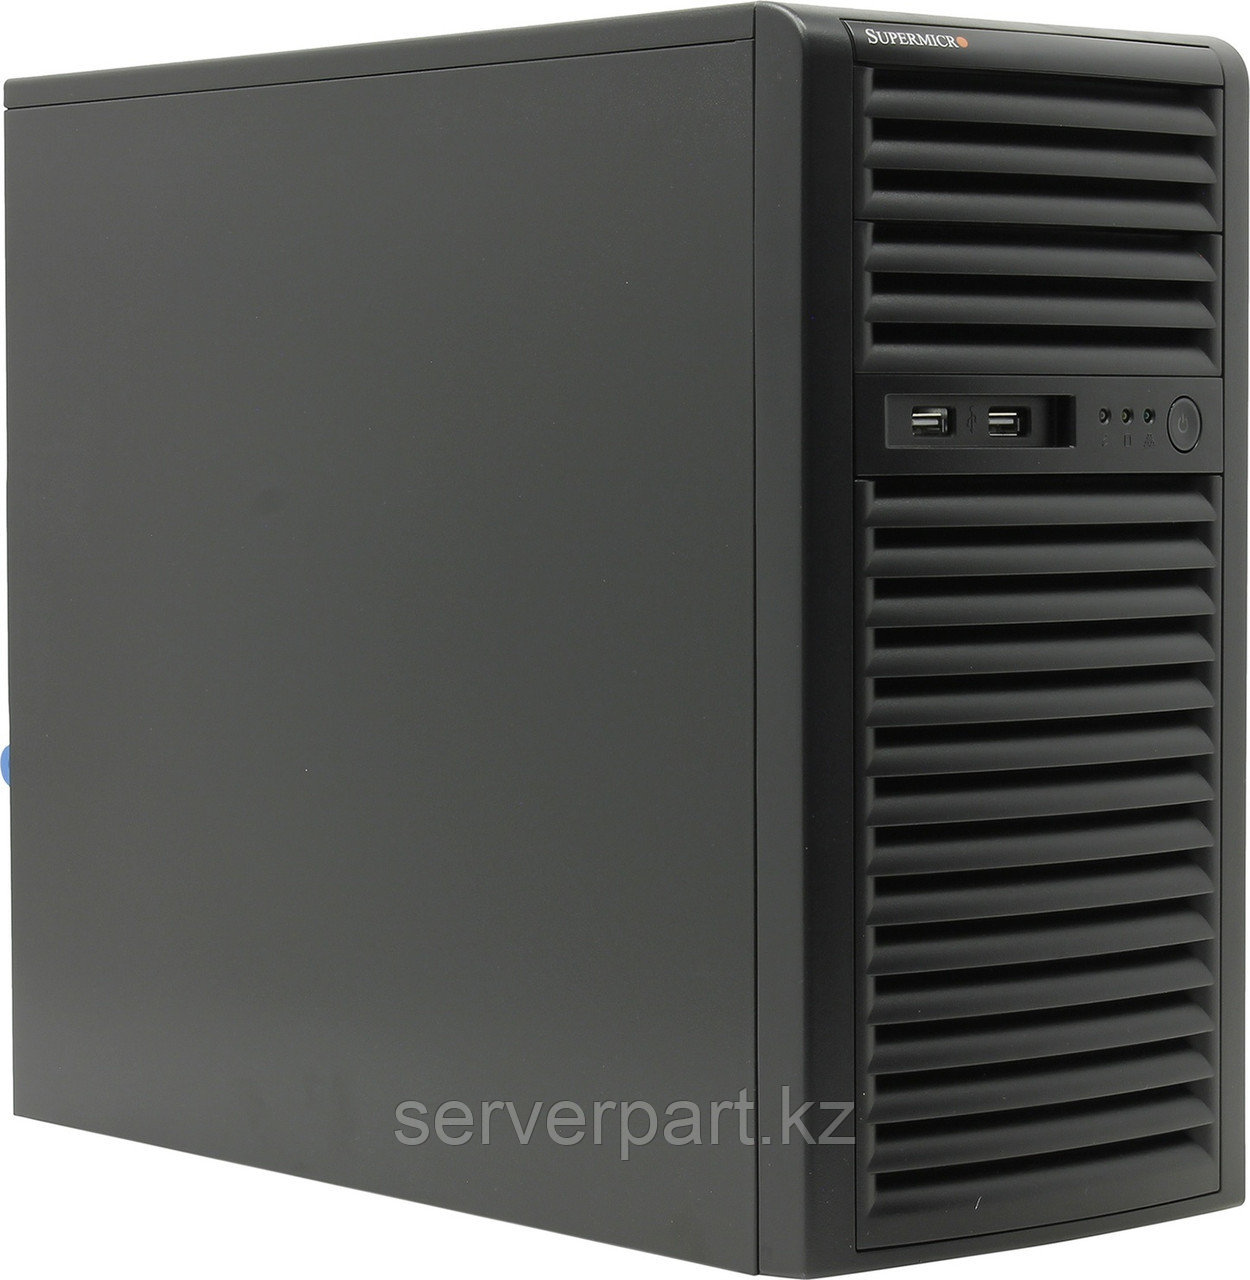 Сервер Supermicro SYS-5039C Tower 4LFF/4-core intel xeon E2124 3.3GHz/64GB UDIMM nECC/1x480GB SSD MU Hyb